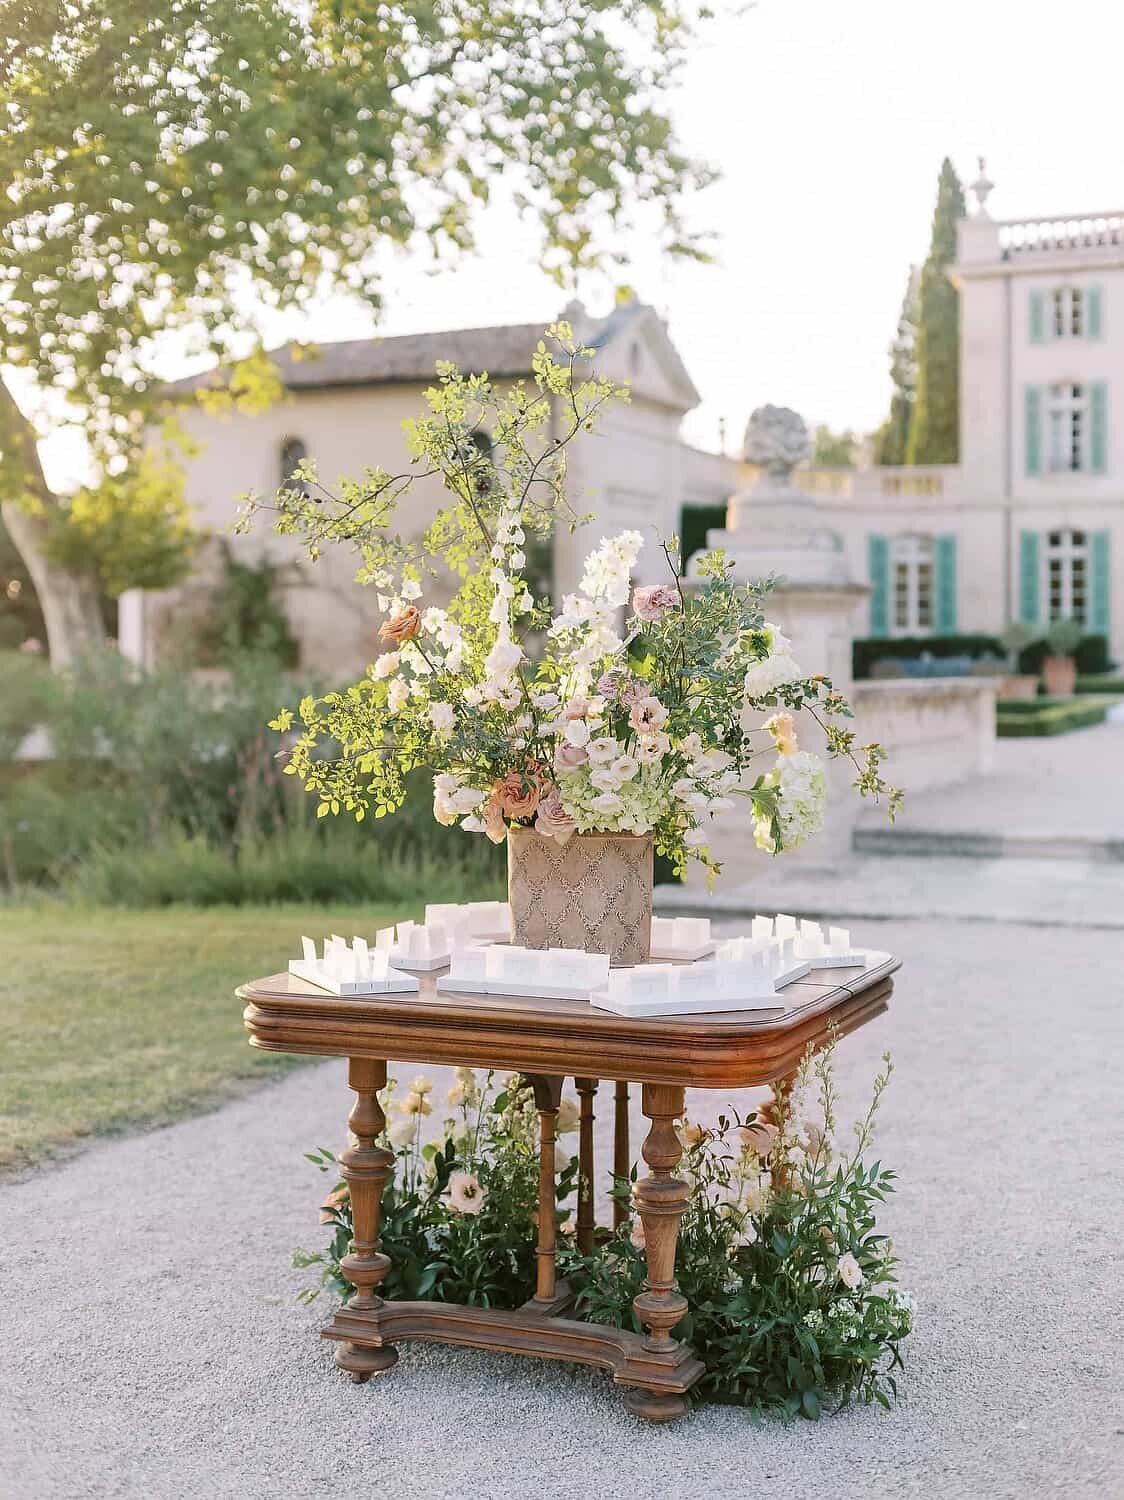 Chateau-de-Tourreau-France-wedding-by-Julia-Kaptelova_Photography-0179_1